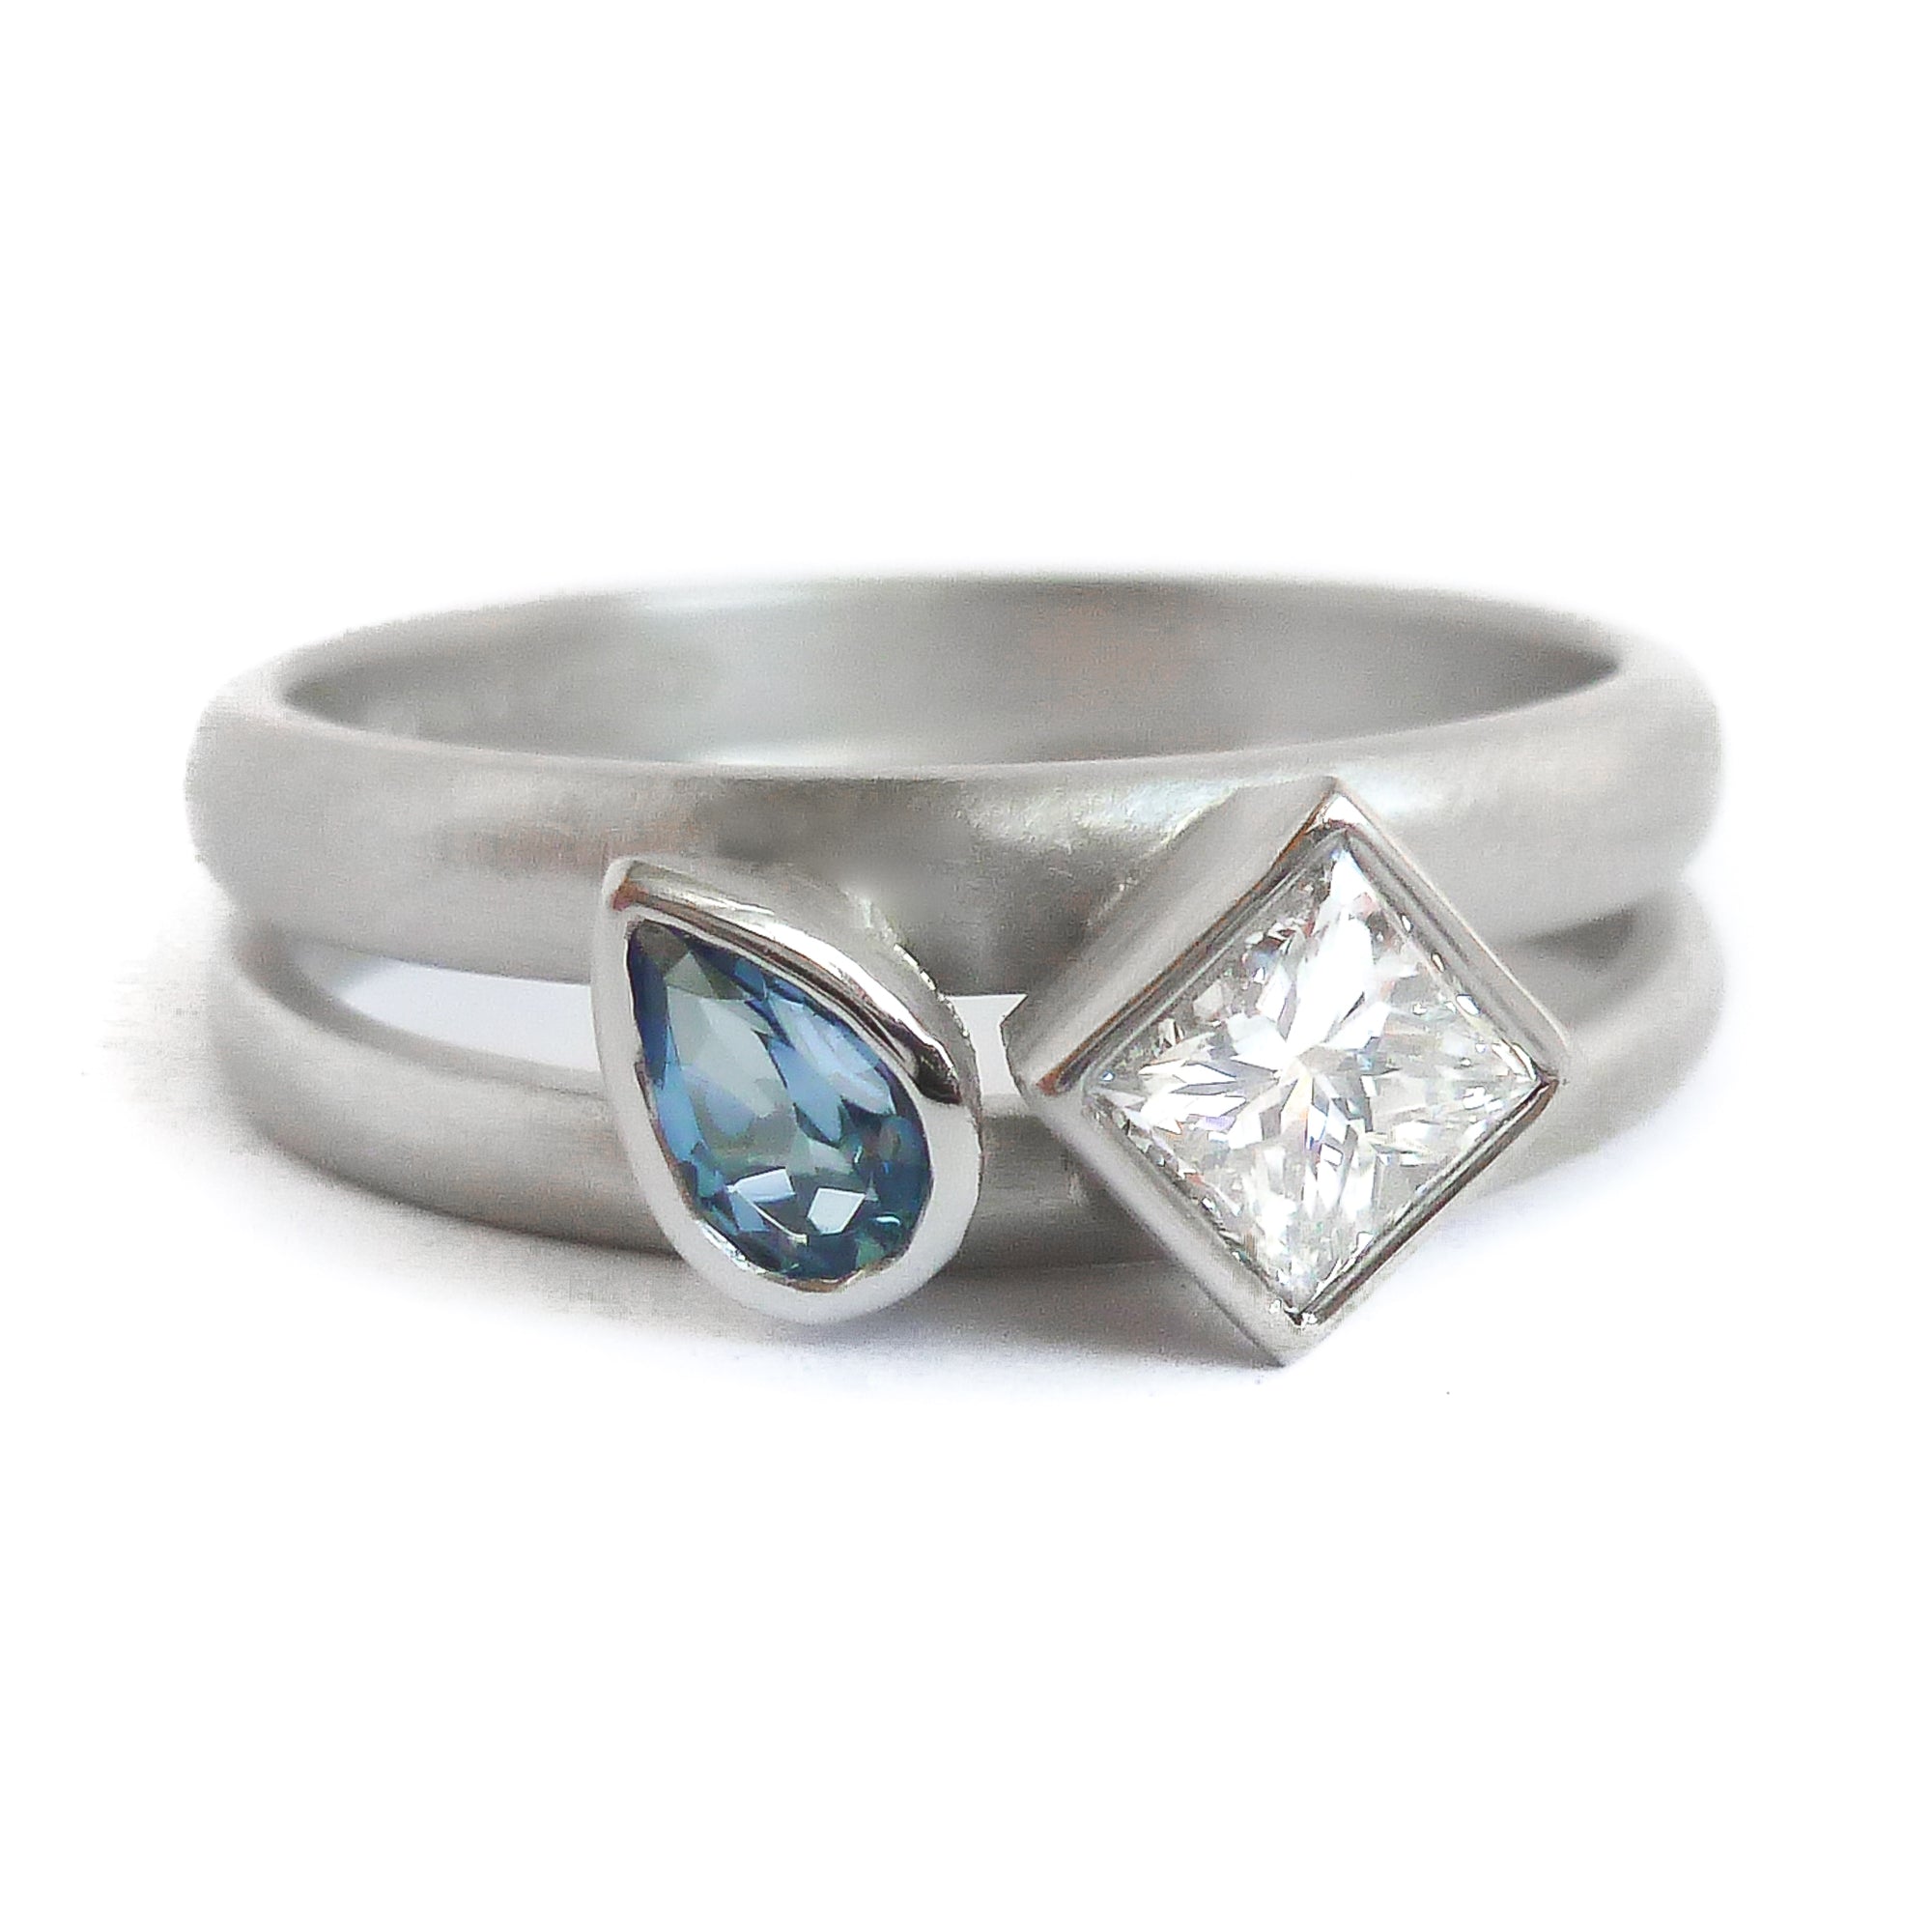 Contemporary diamond and aquamarine platinum dress ring handmade by Sue Lane